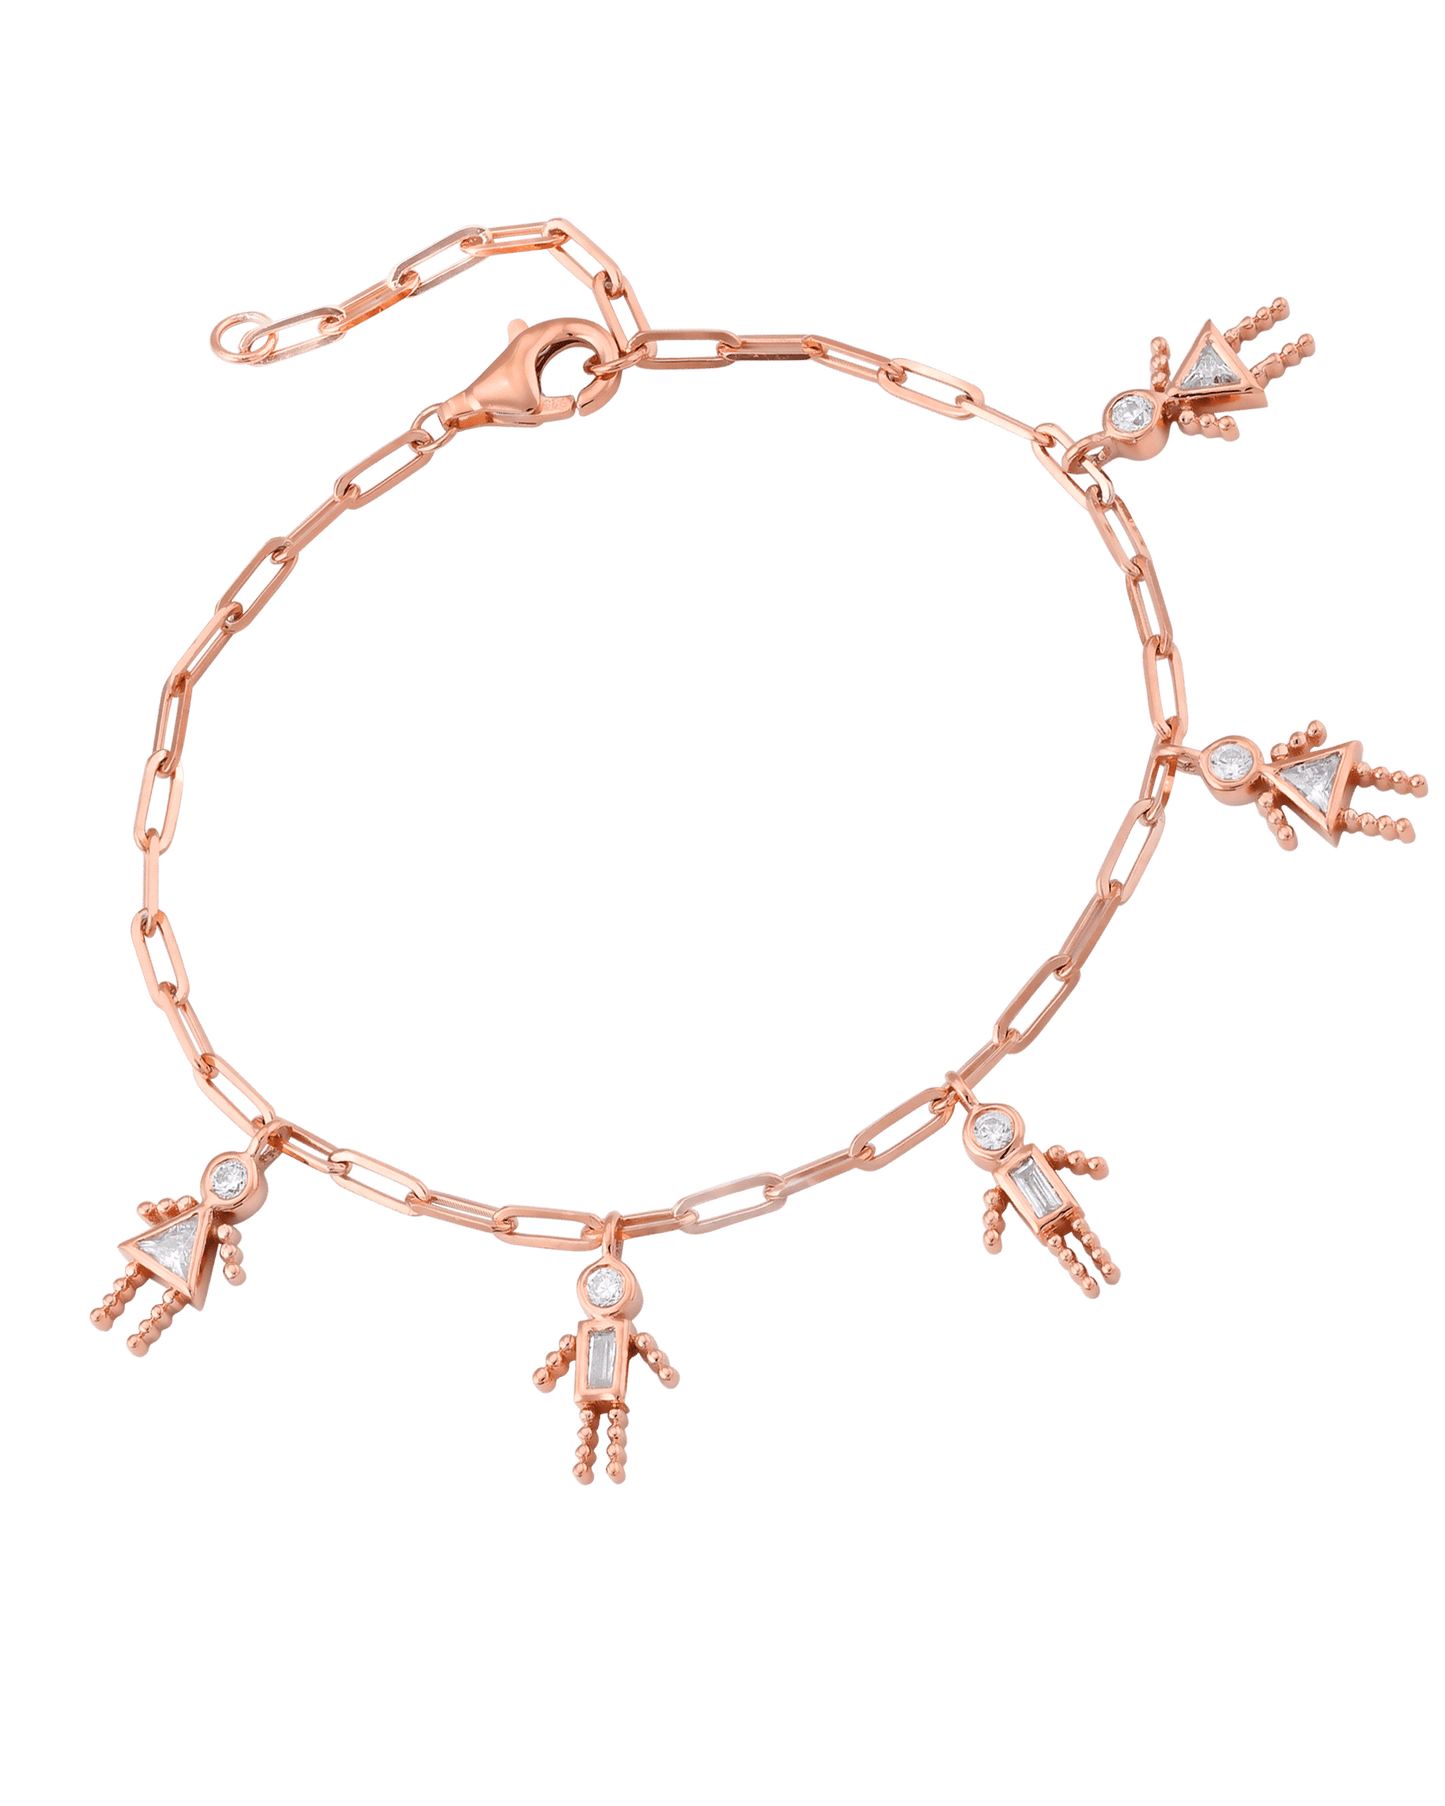 Mini Me Links Bracelet - 18K Rose Vermeil Bracelets magal-dev 1 6”+1” extender 